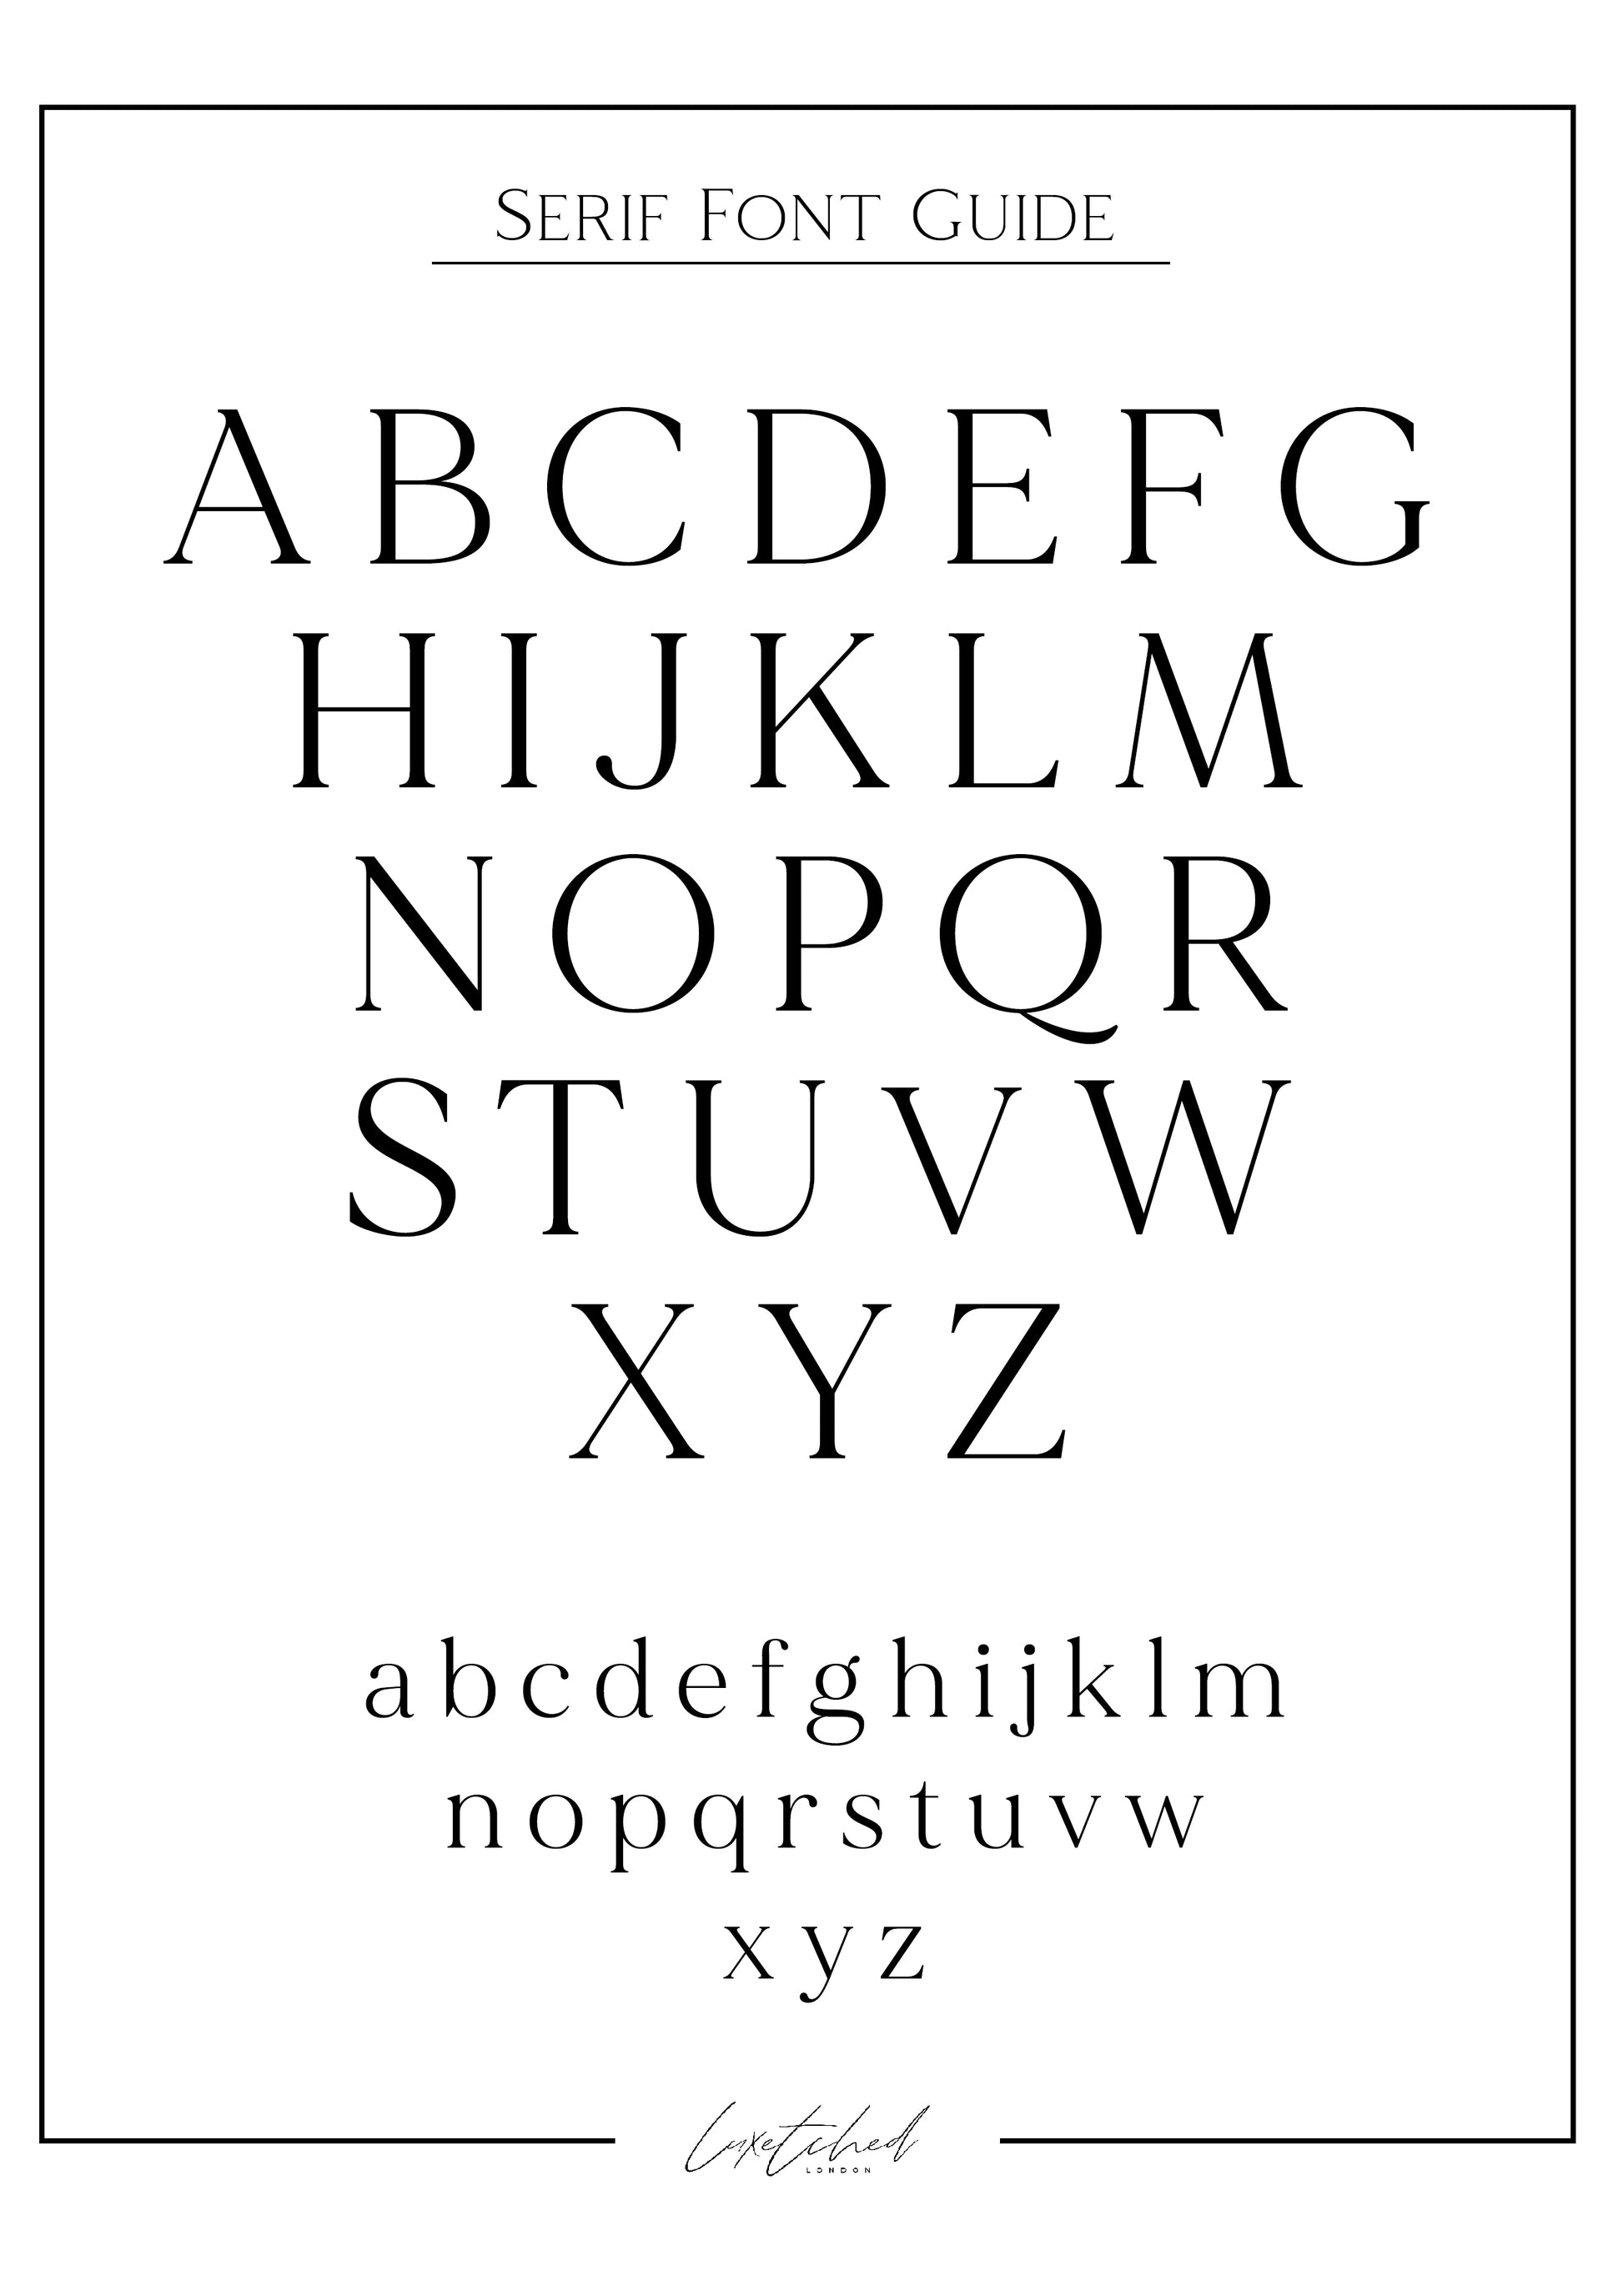 Serif Fonts Guide.jpg